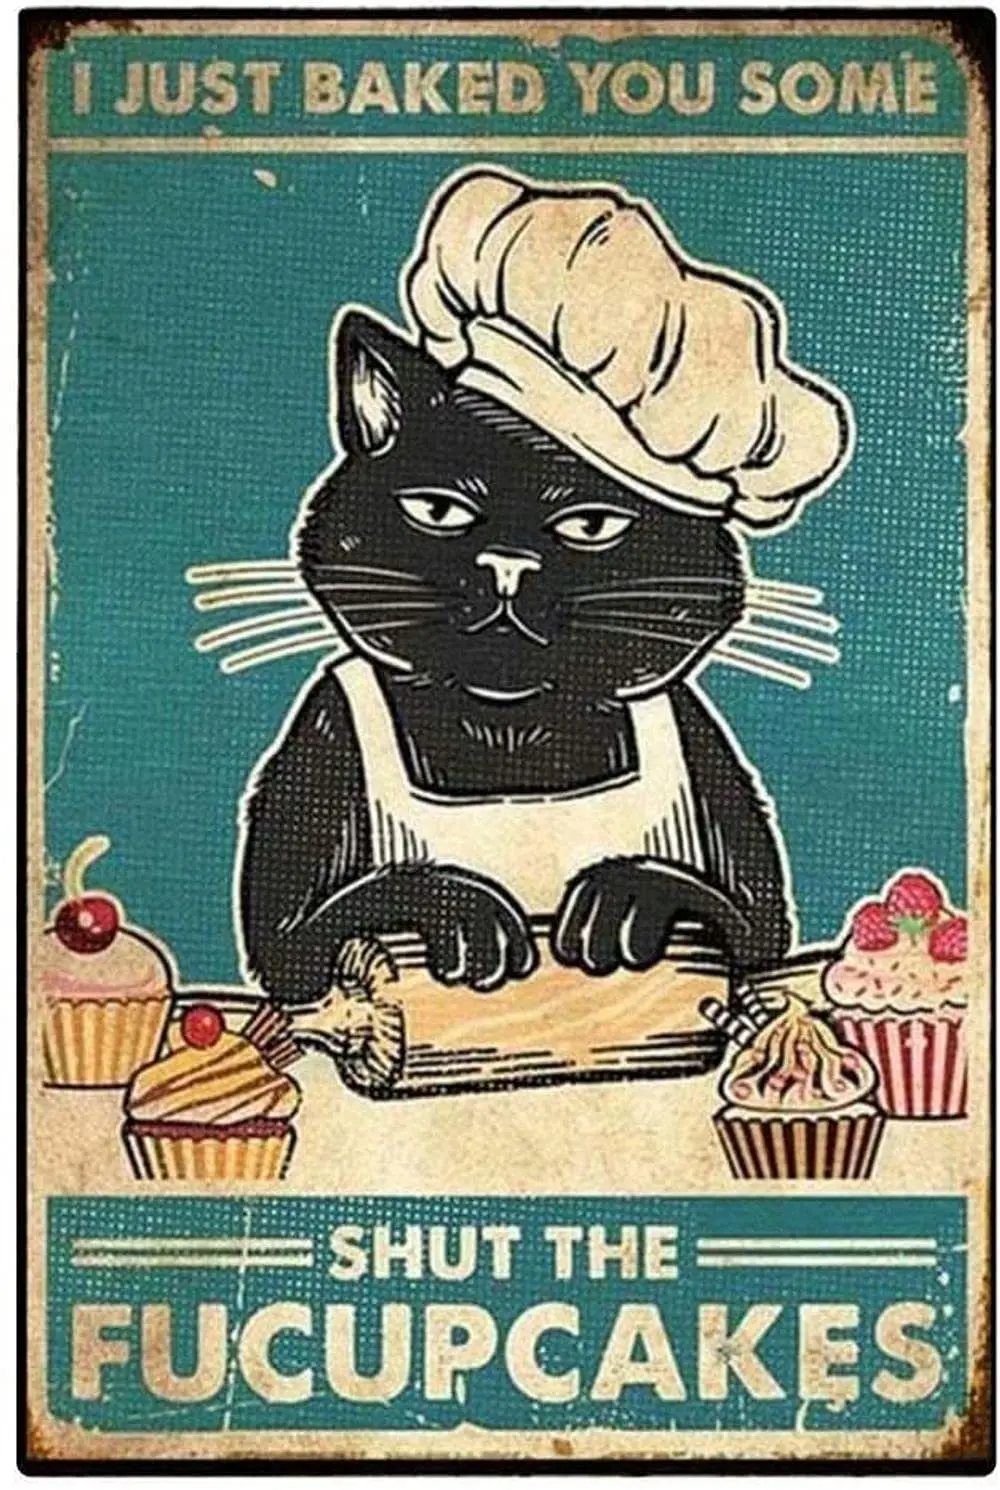 

GadgetsTalk Black Cat Metal Poster- I Just Baked You Some Shut The Fucupcakes Metal Tin Sign Home Kitchen Cafe Farmhouse Wall De